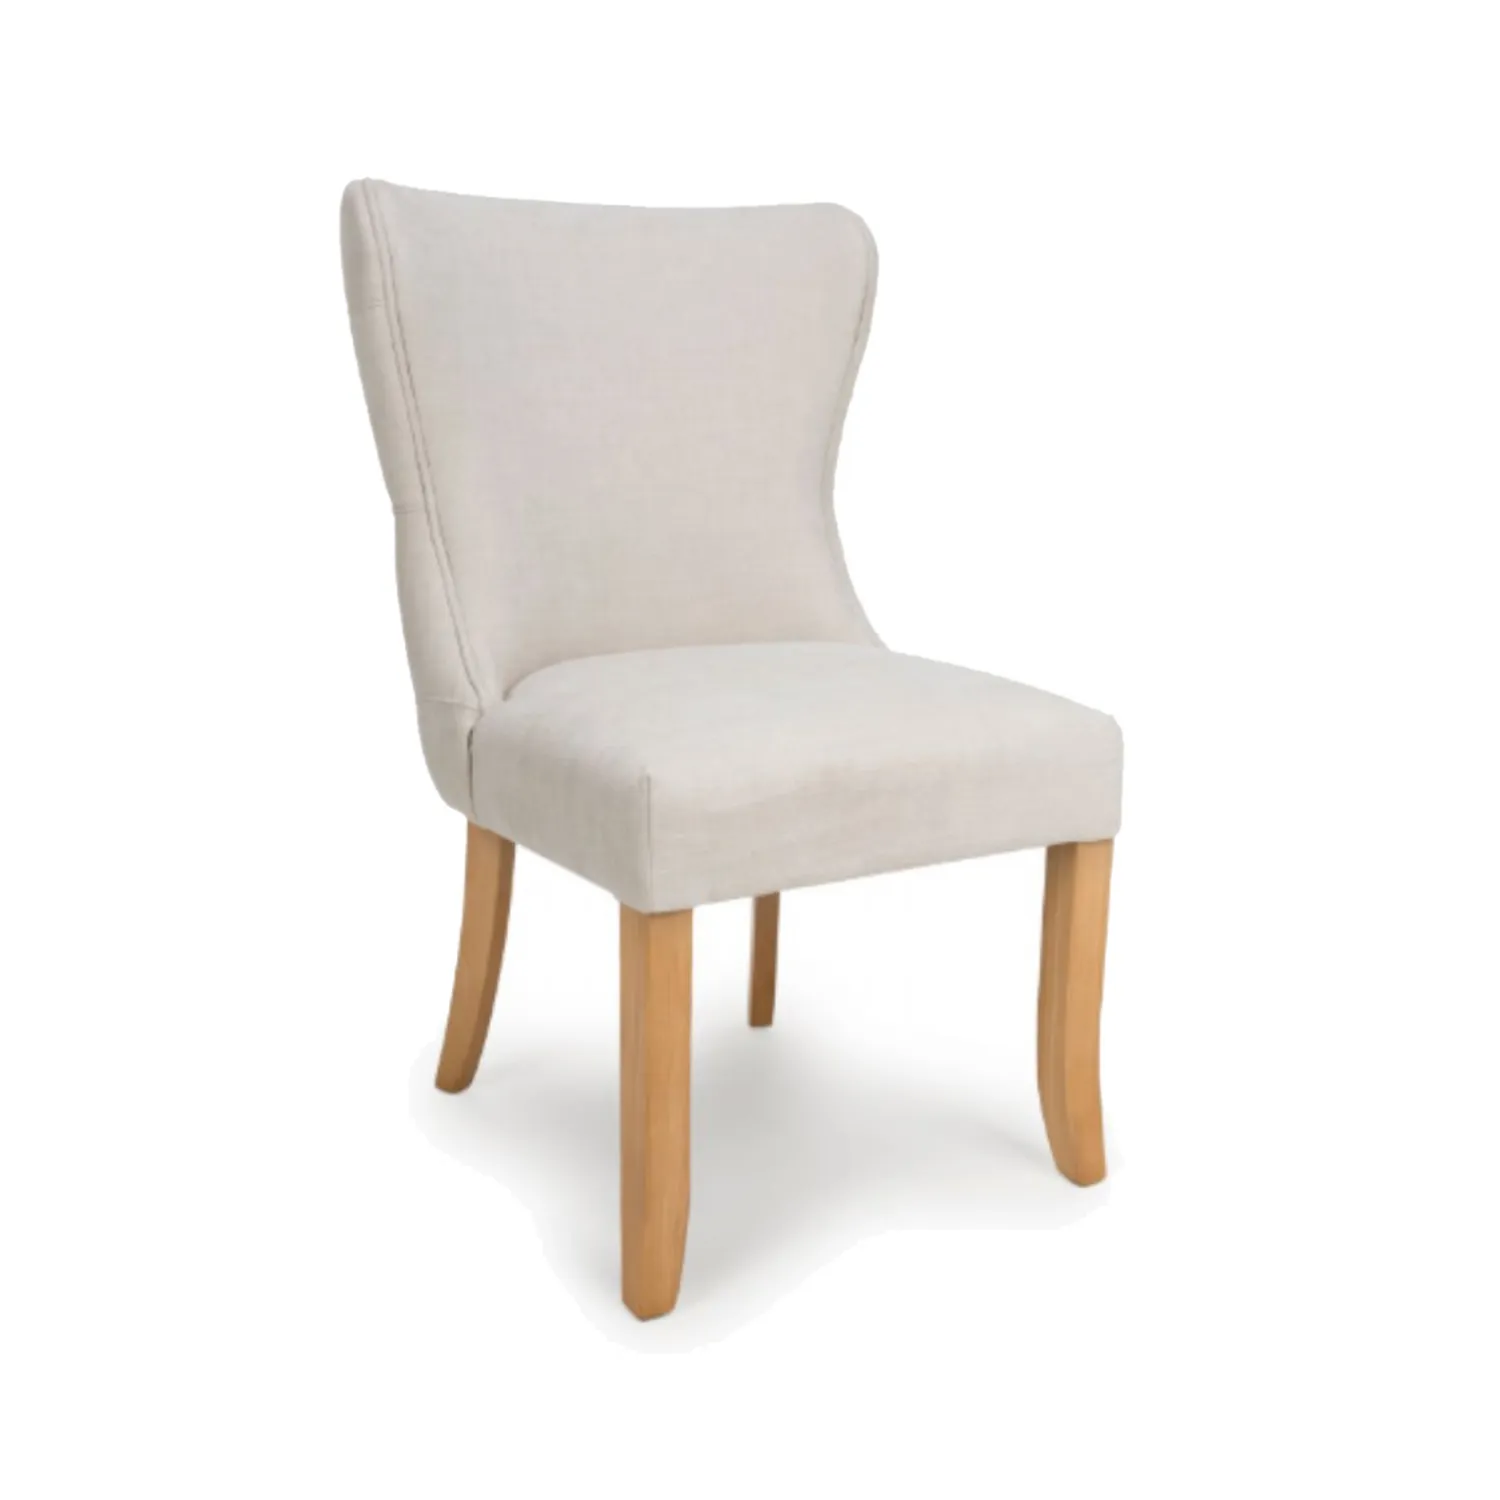 Linen Fabric Buttoned Upholstered Dining Chair Oak Legs